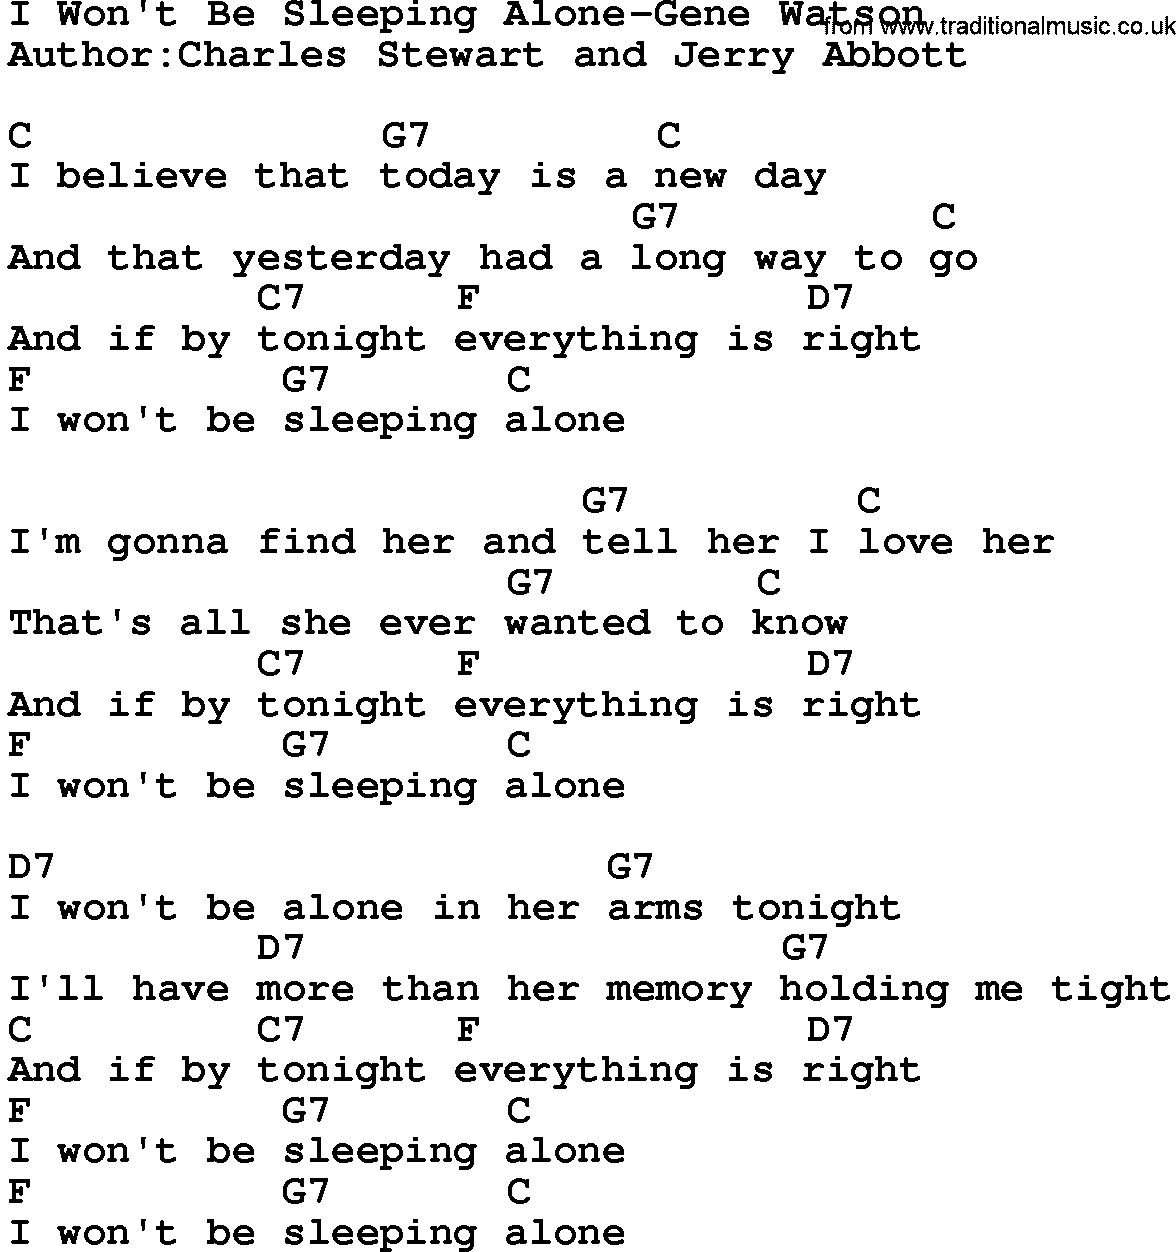 Country music song: I Won't Be Sleeping Alone-Gene Watson lyrics and chords